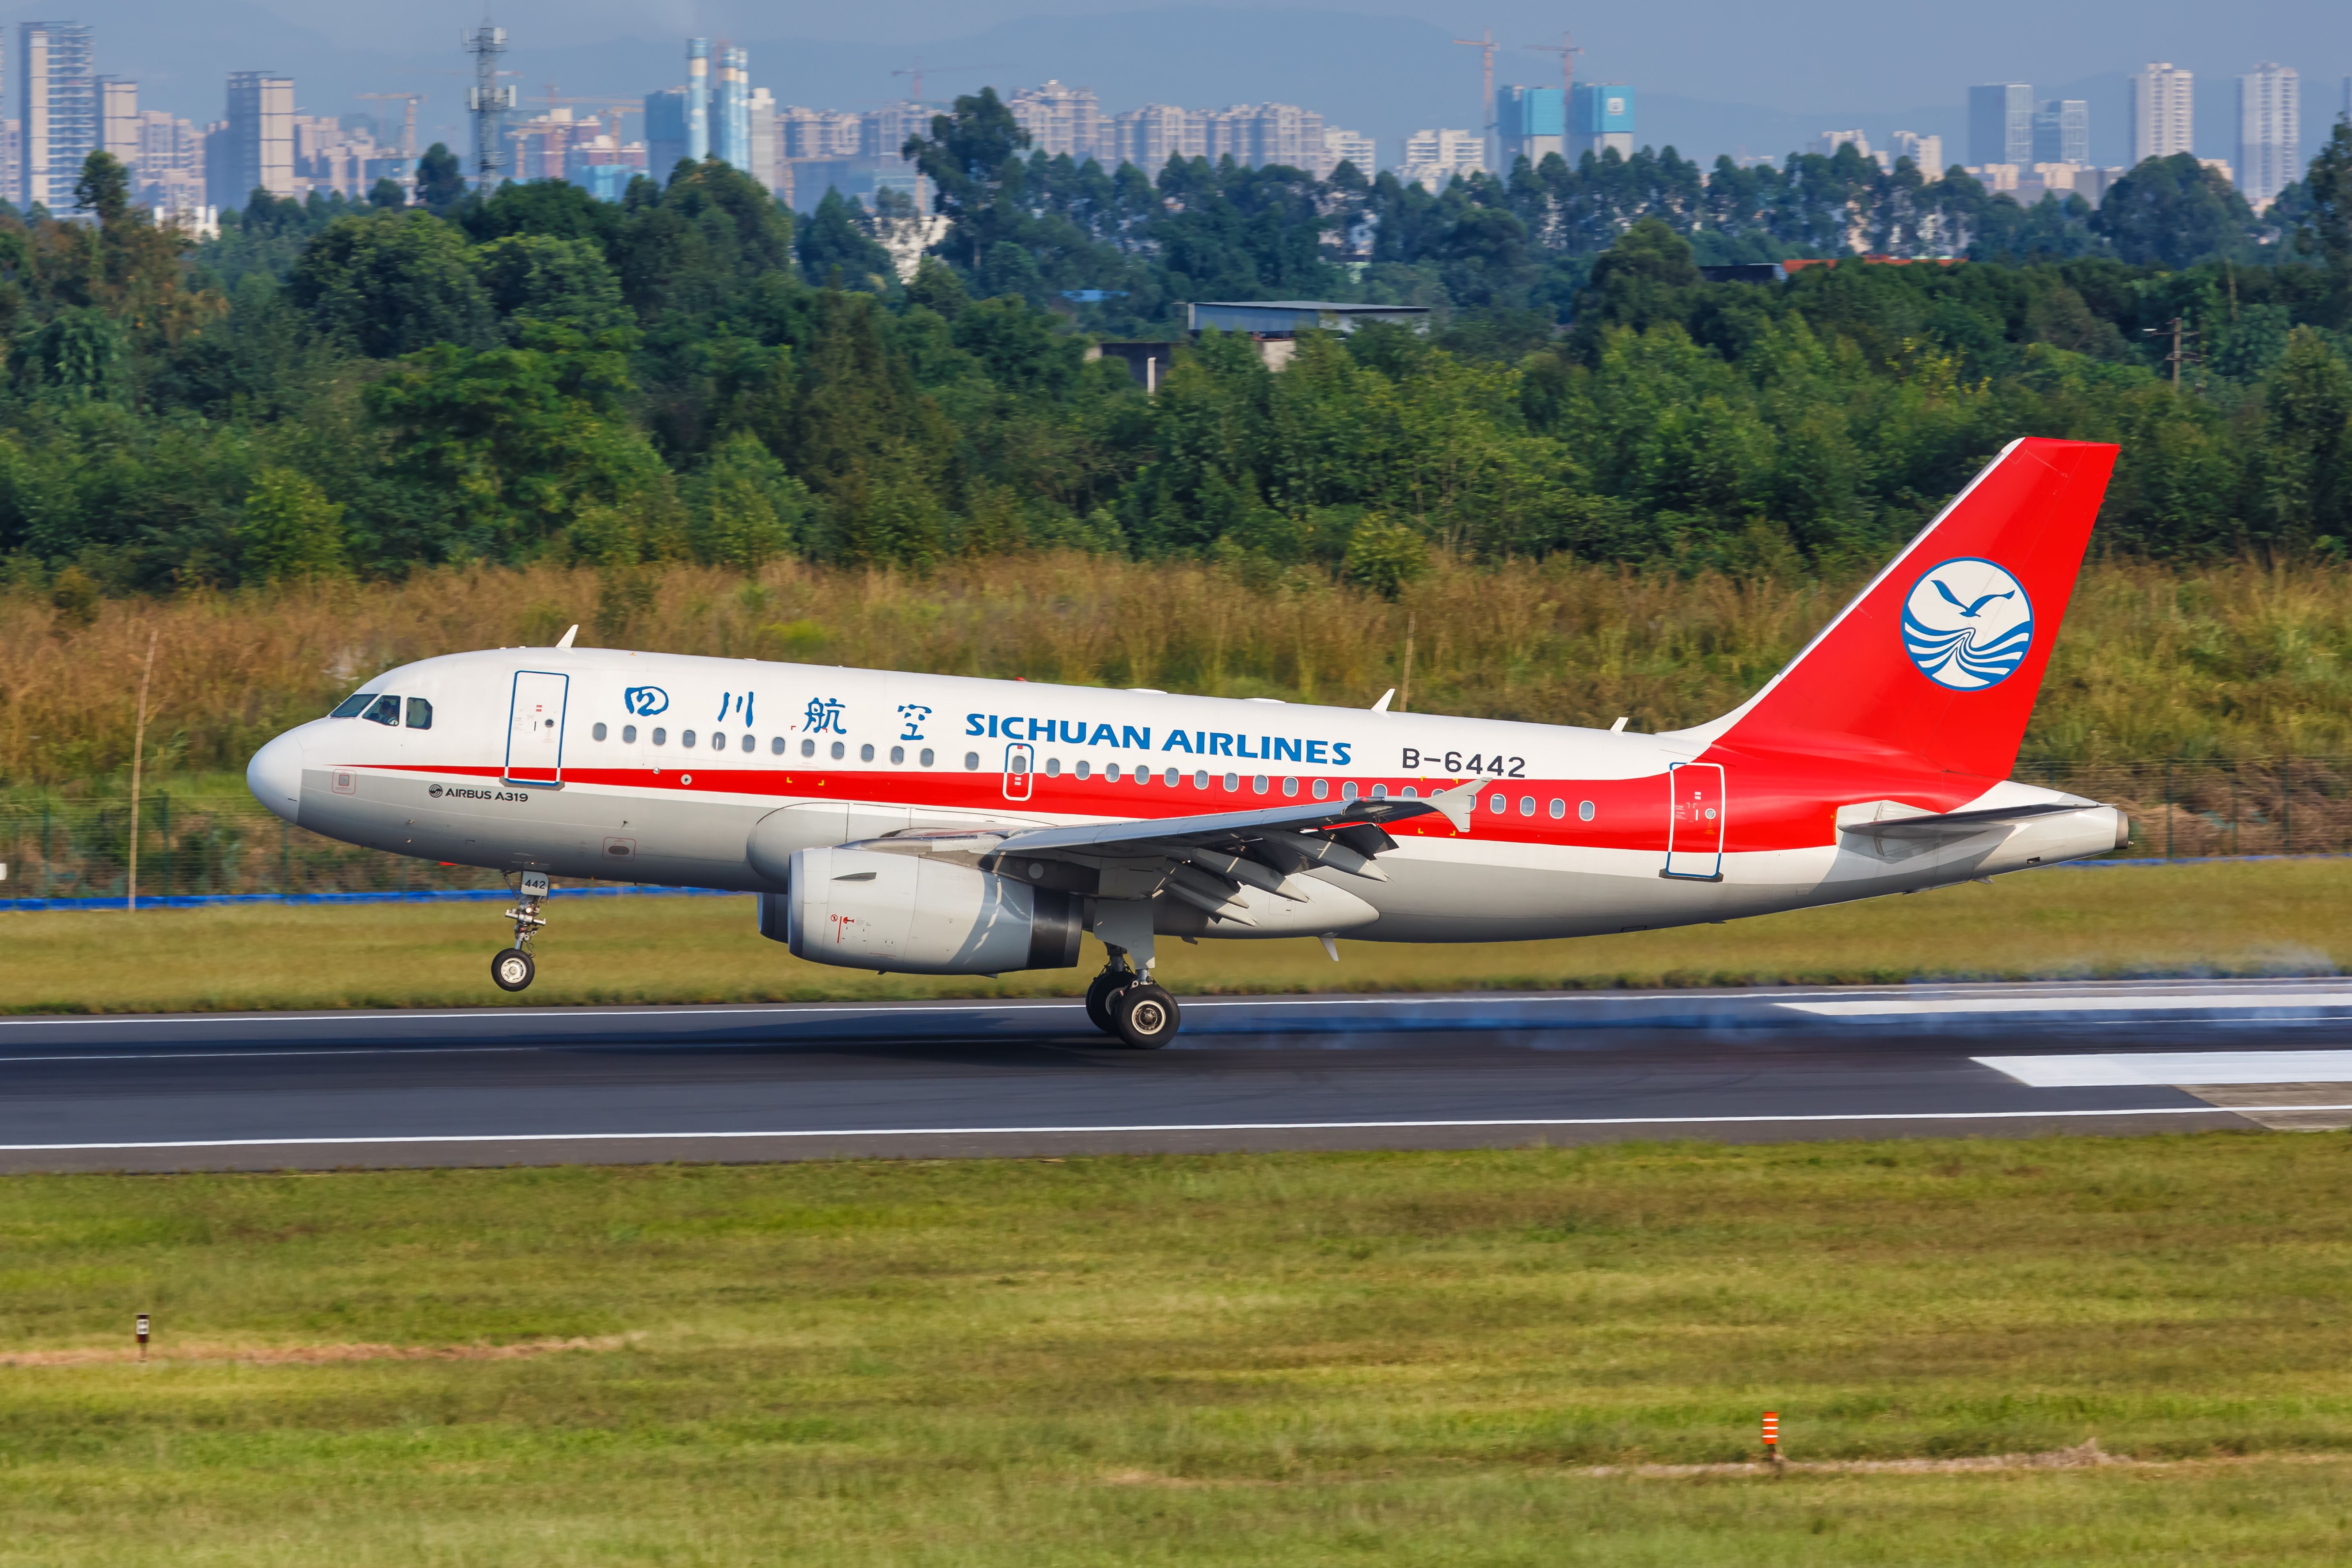 A Sichuan Airlines Airbus A319 airplane at Chengdu airport (CTU) in China